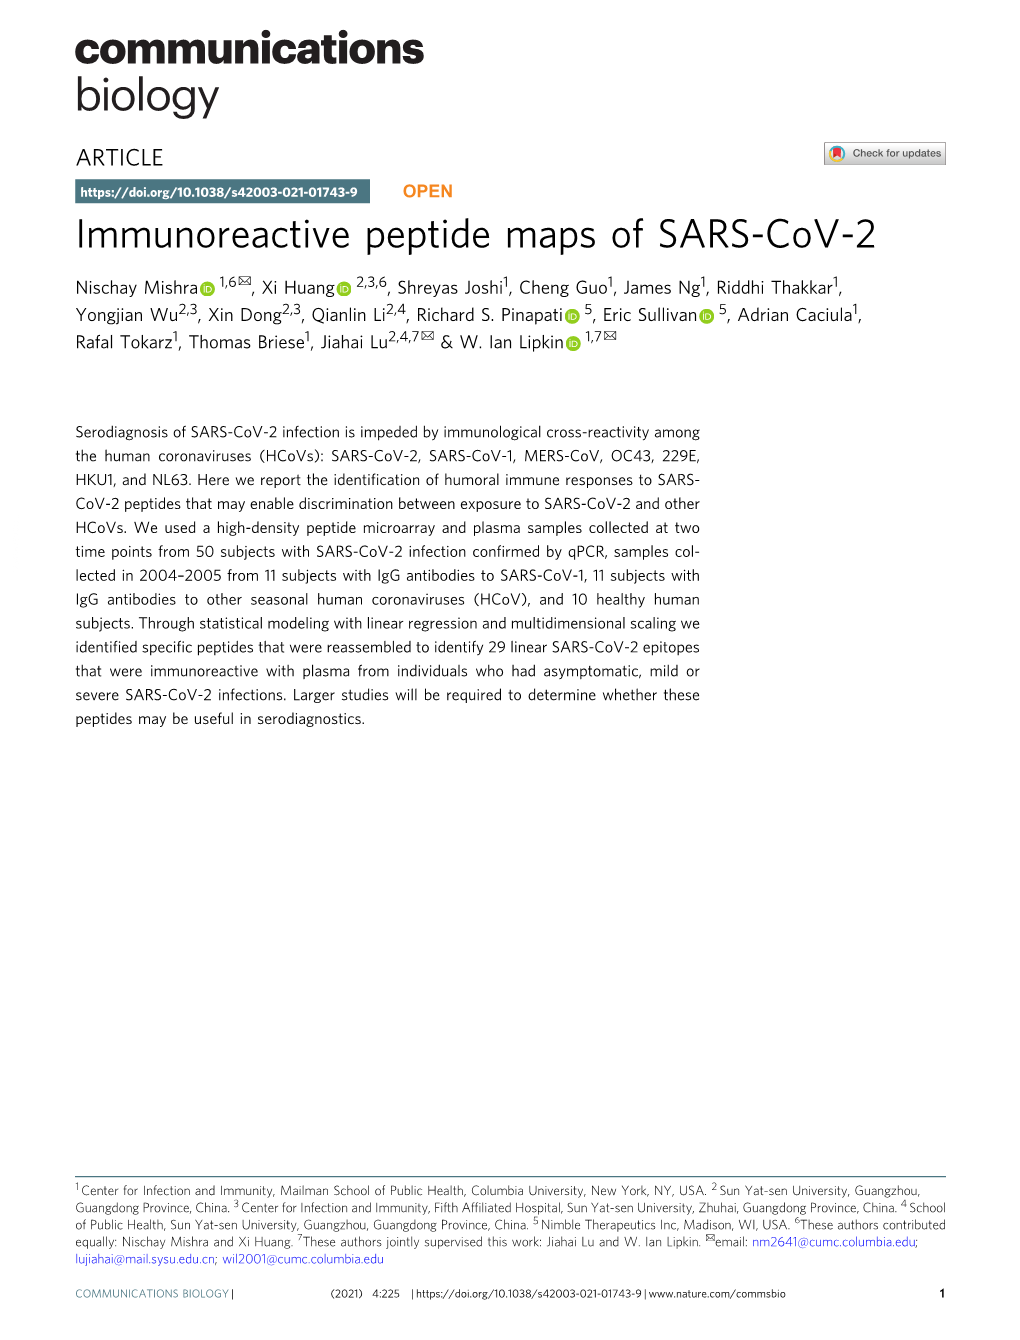 Immunoreactive Peptide Maps of SARS-Cov-2